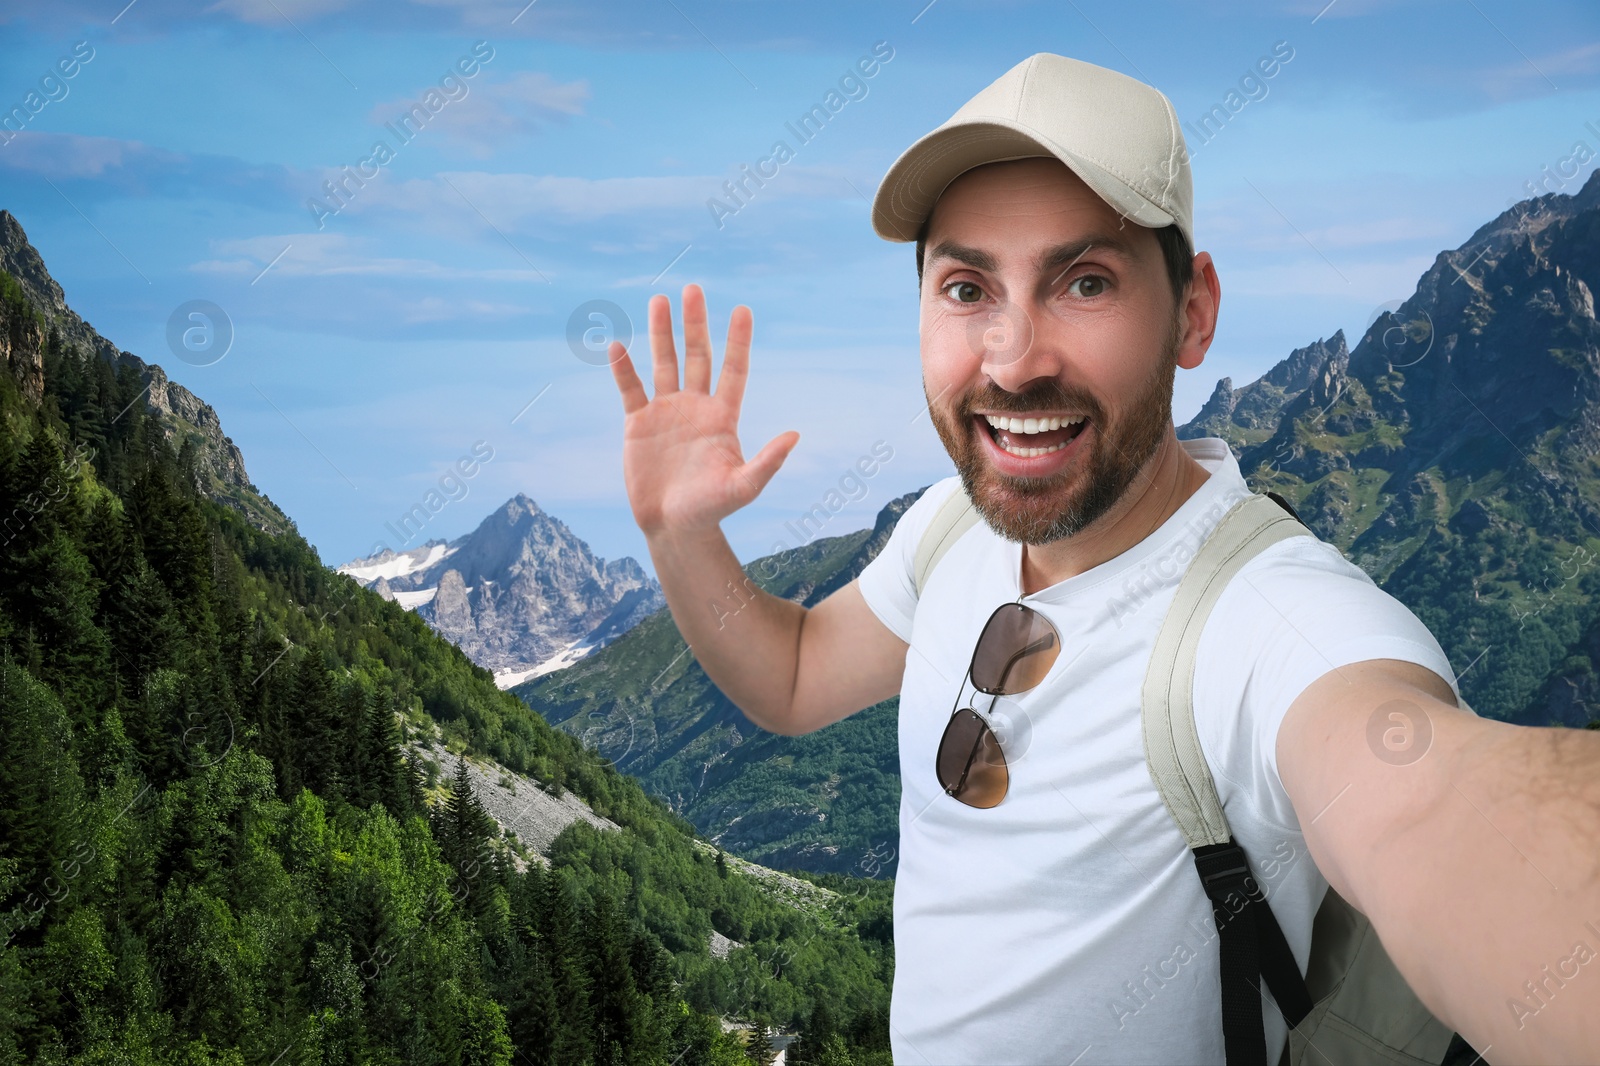 Image of Smiling man waving hand while taking selfie in mountains